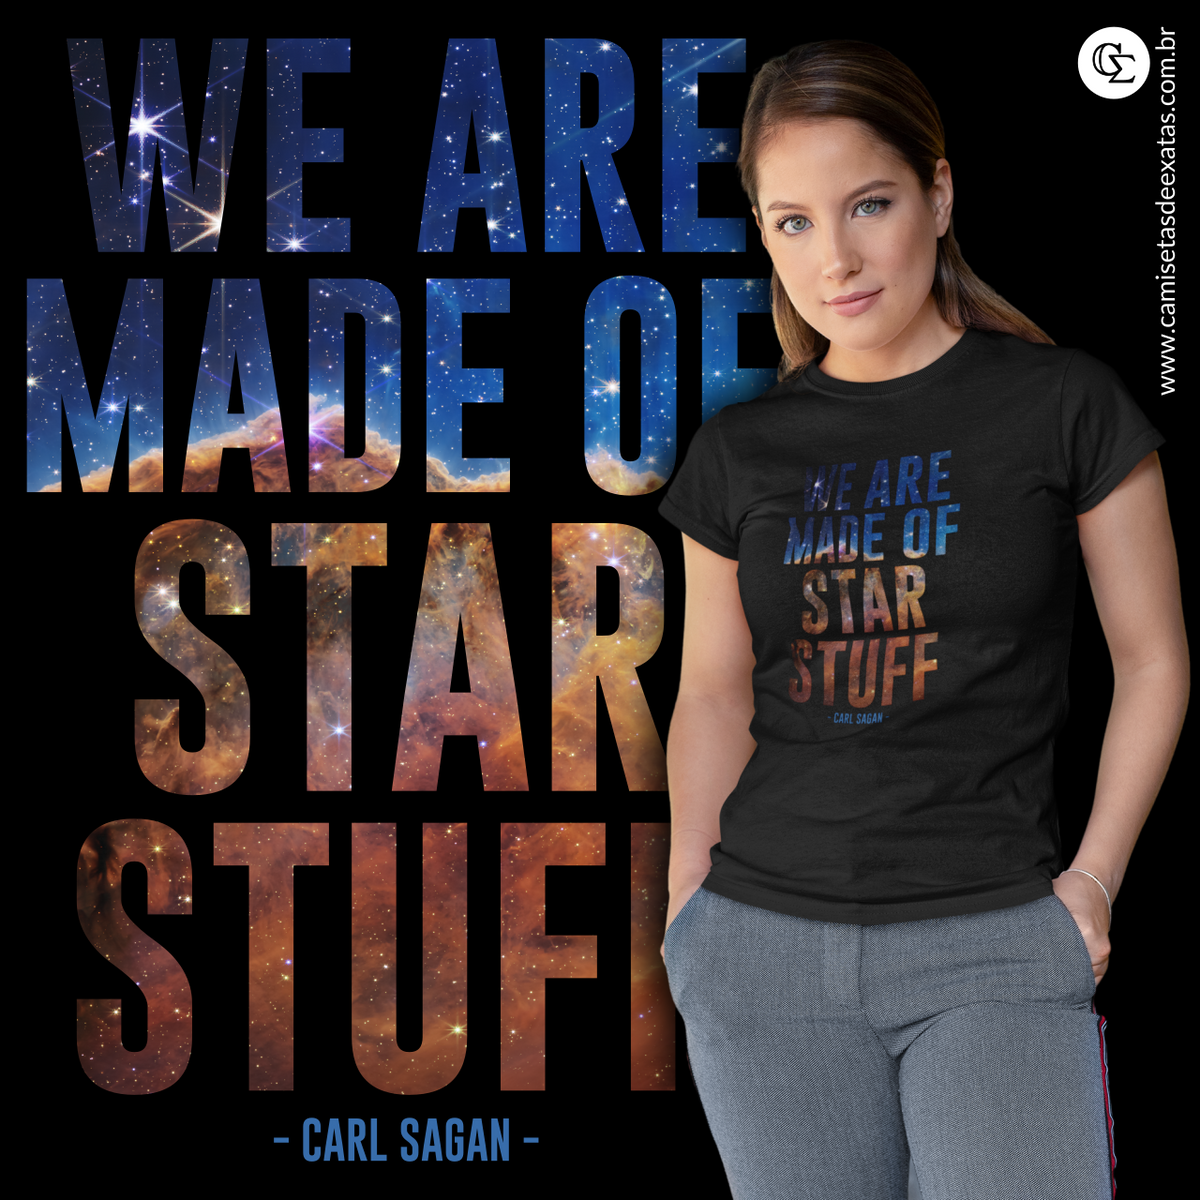 Nome do produto: WE ARE MADE OF STAR STUFF